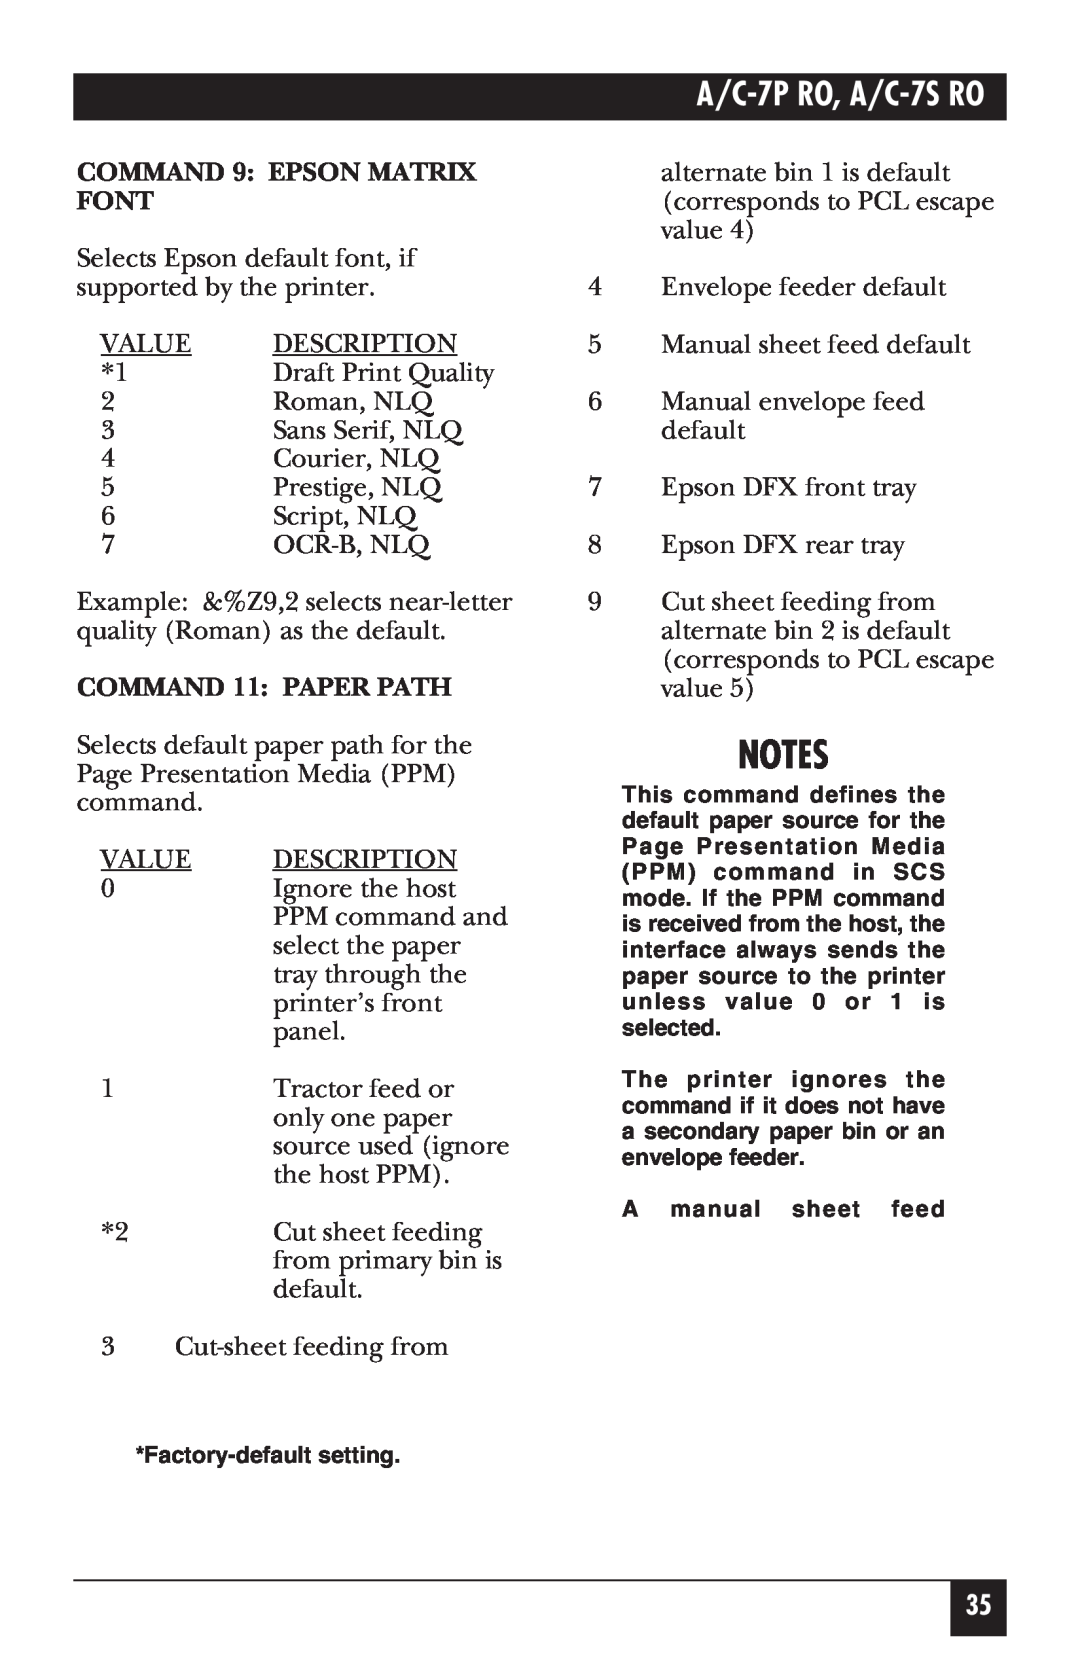 Black Box manual COMMAND 9 EPSON MATRIX, Font, COMMAND 11 PAPER PATH, A/C-7P RO, A/C-7S RO 